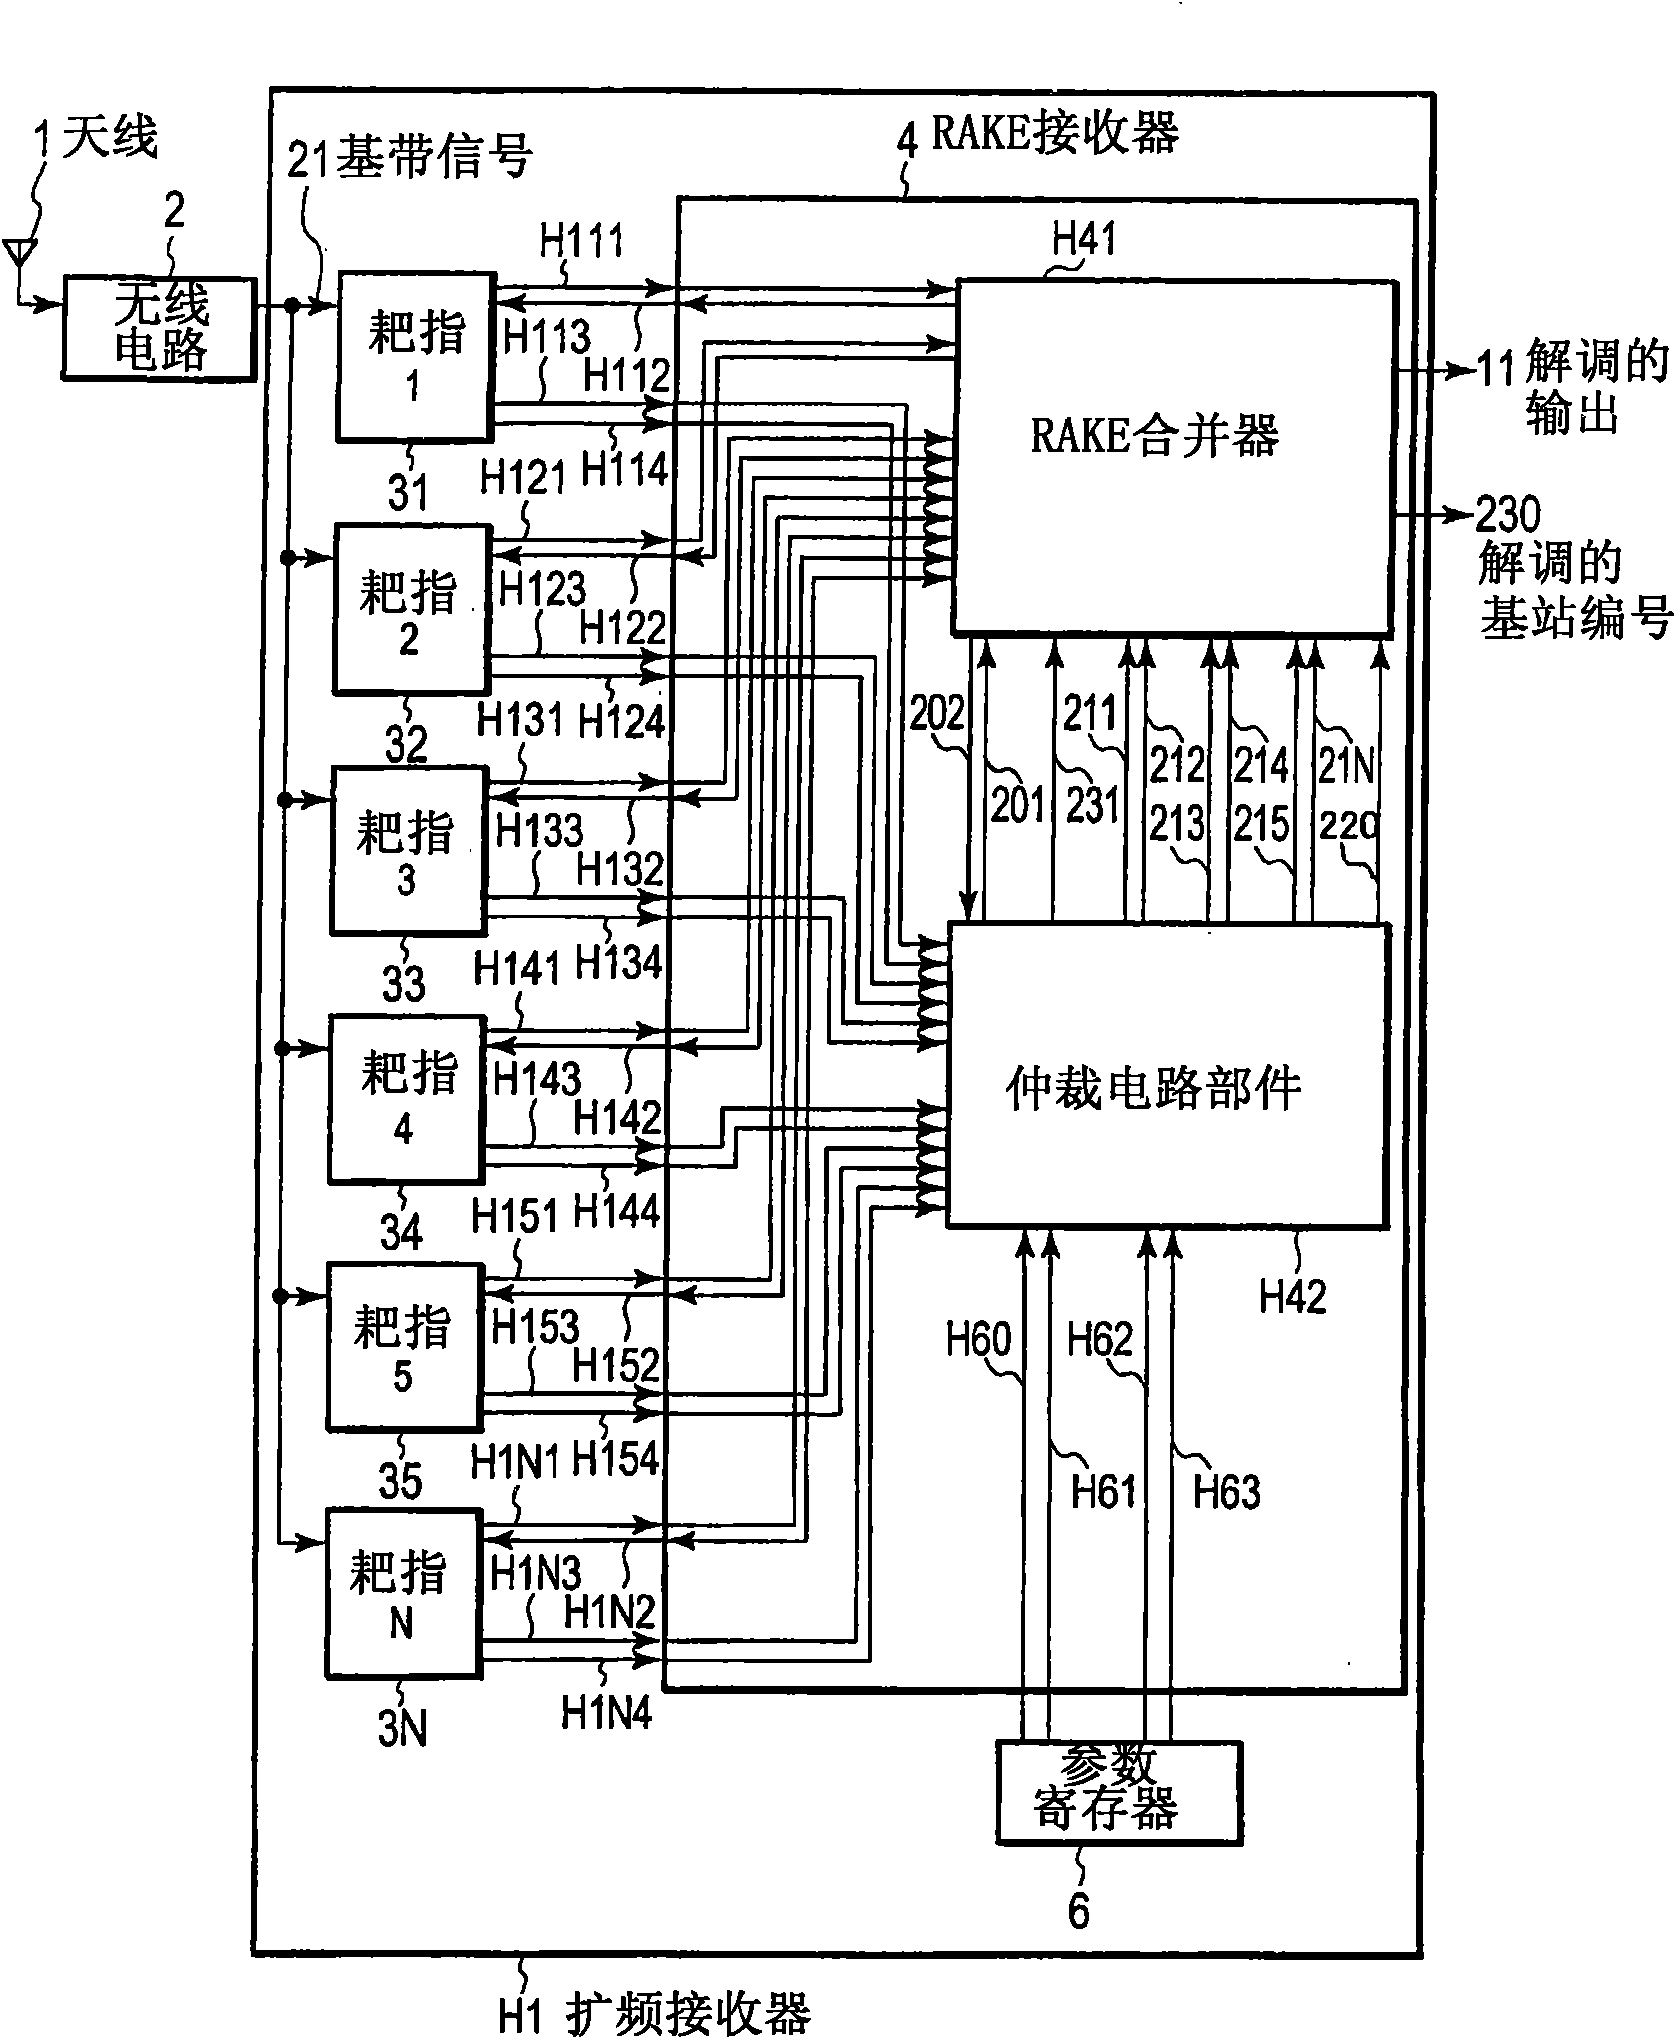 Spread-spectrum receiver, RAKE receiver and method for RAKE synthesis